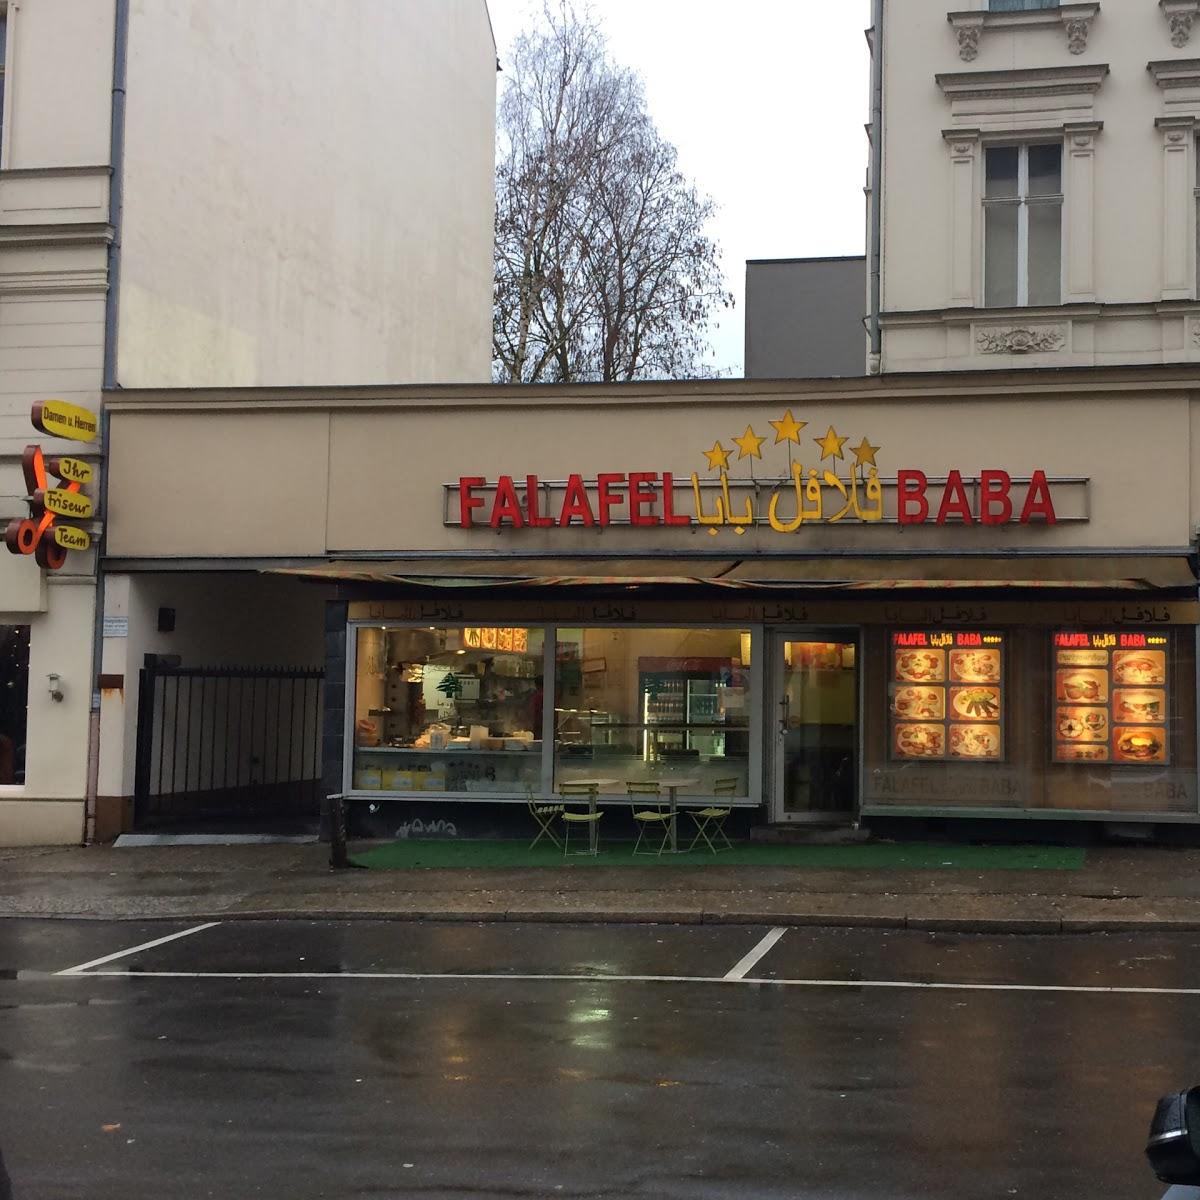 Restaurant "Falafel Baba" in Berlin